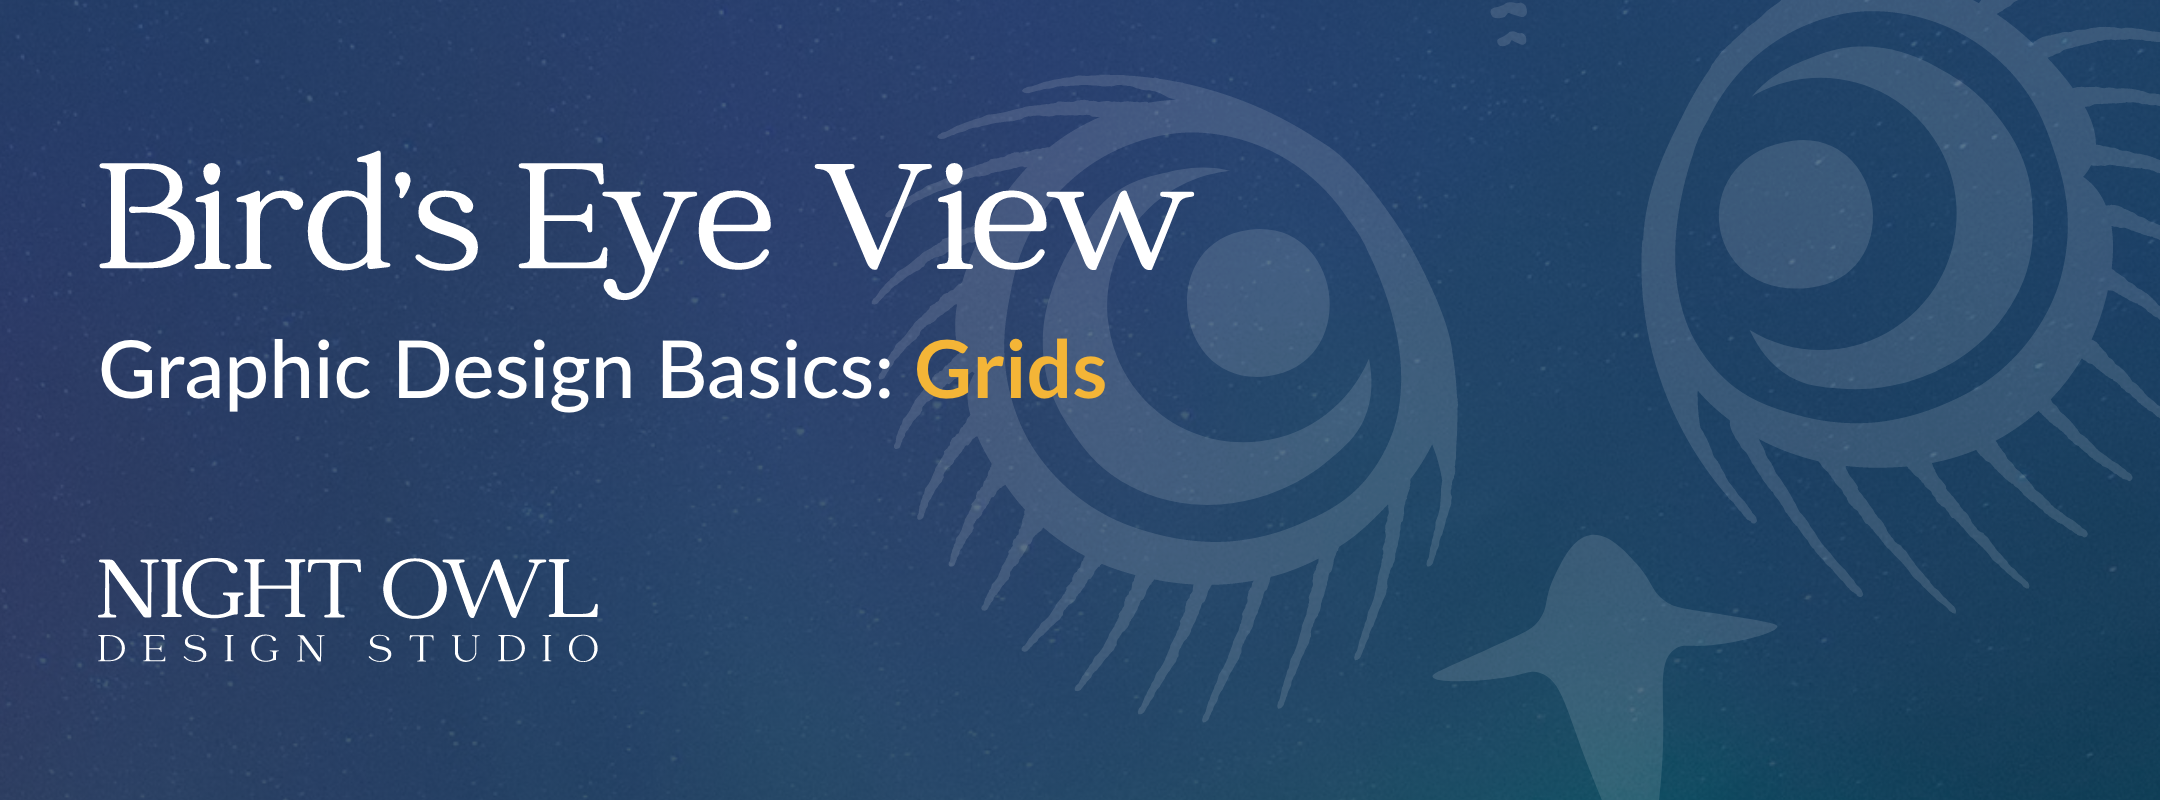 Bird’s Eye View, Graphic Design Basics: Grids